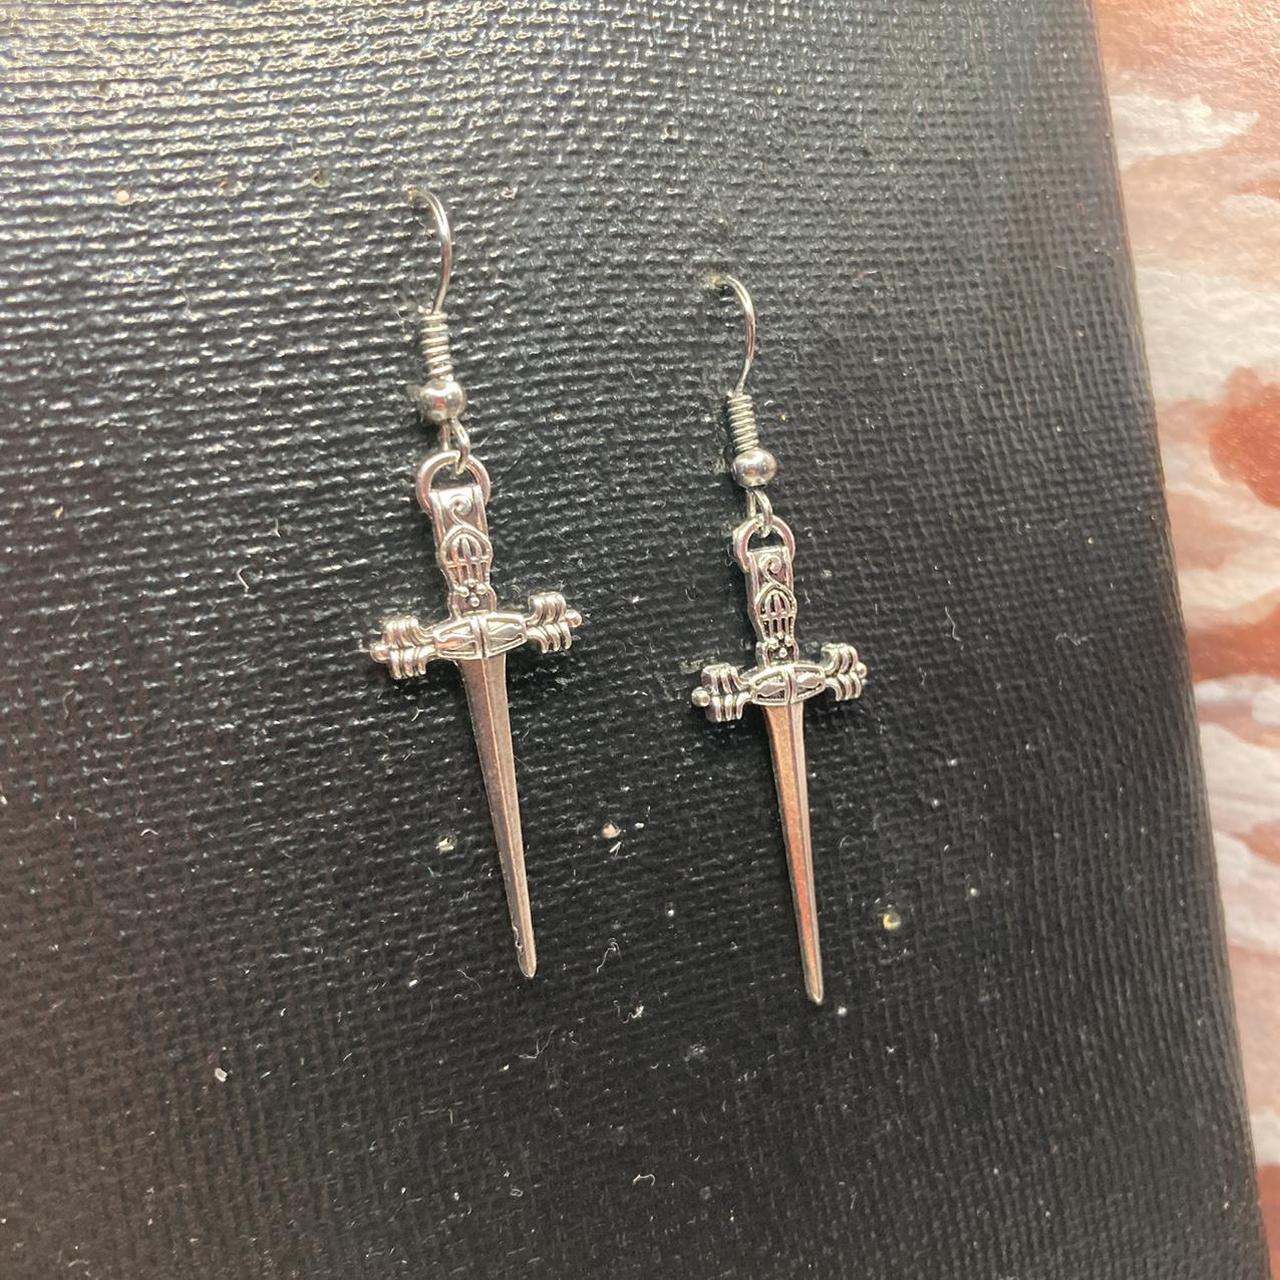 Product Image 1 - Silver dagger dangle earrings!🔥

☀️$8☀️ +